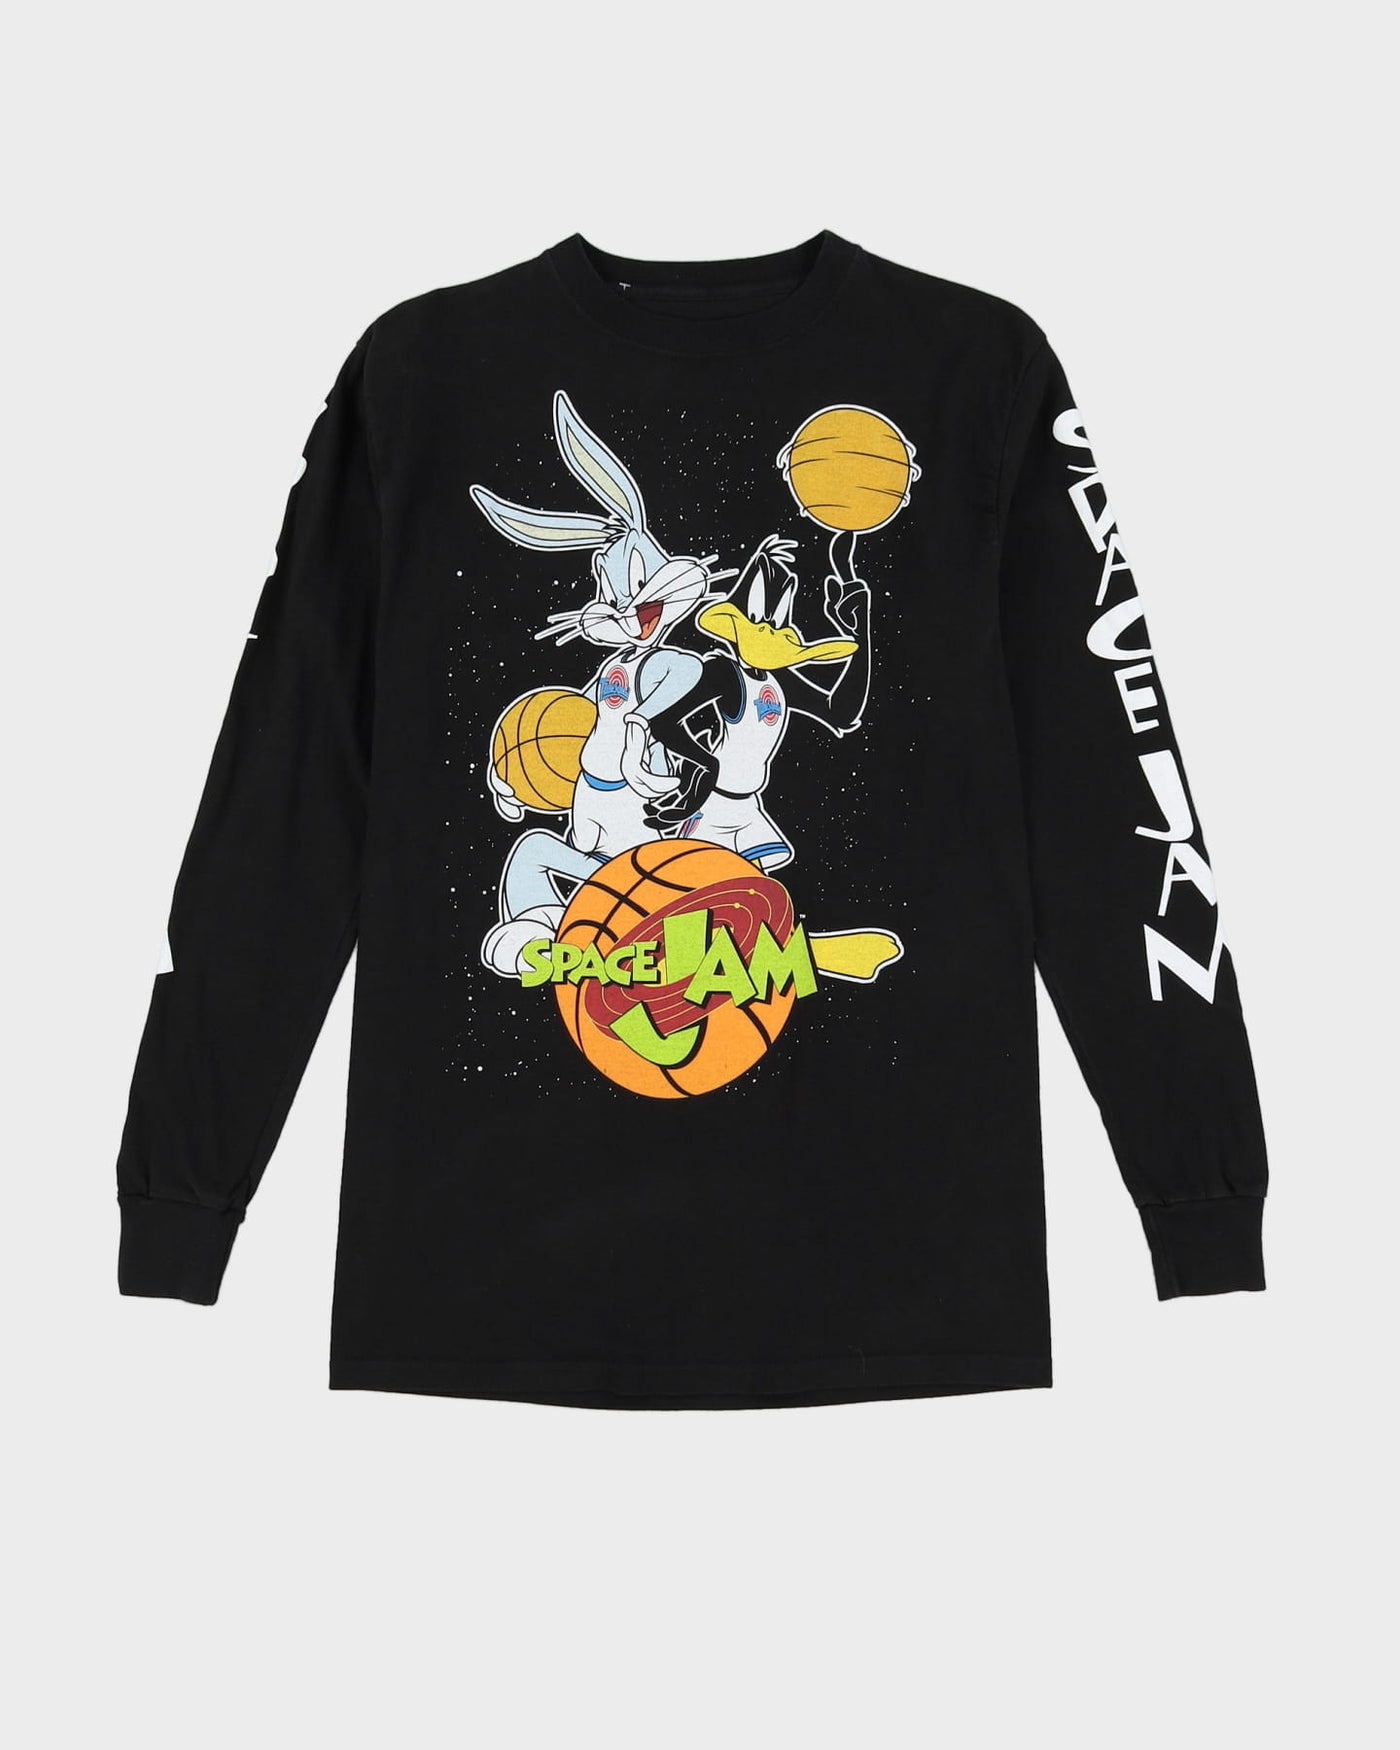 00s Looney Tunes Space Jam Black Long-Sleeve T-Shirt - S